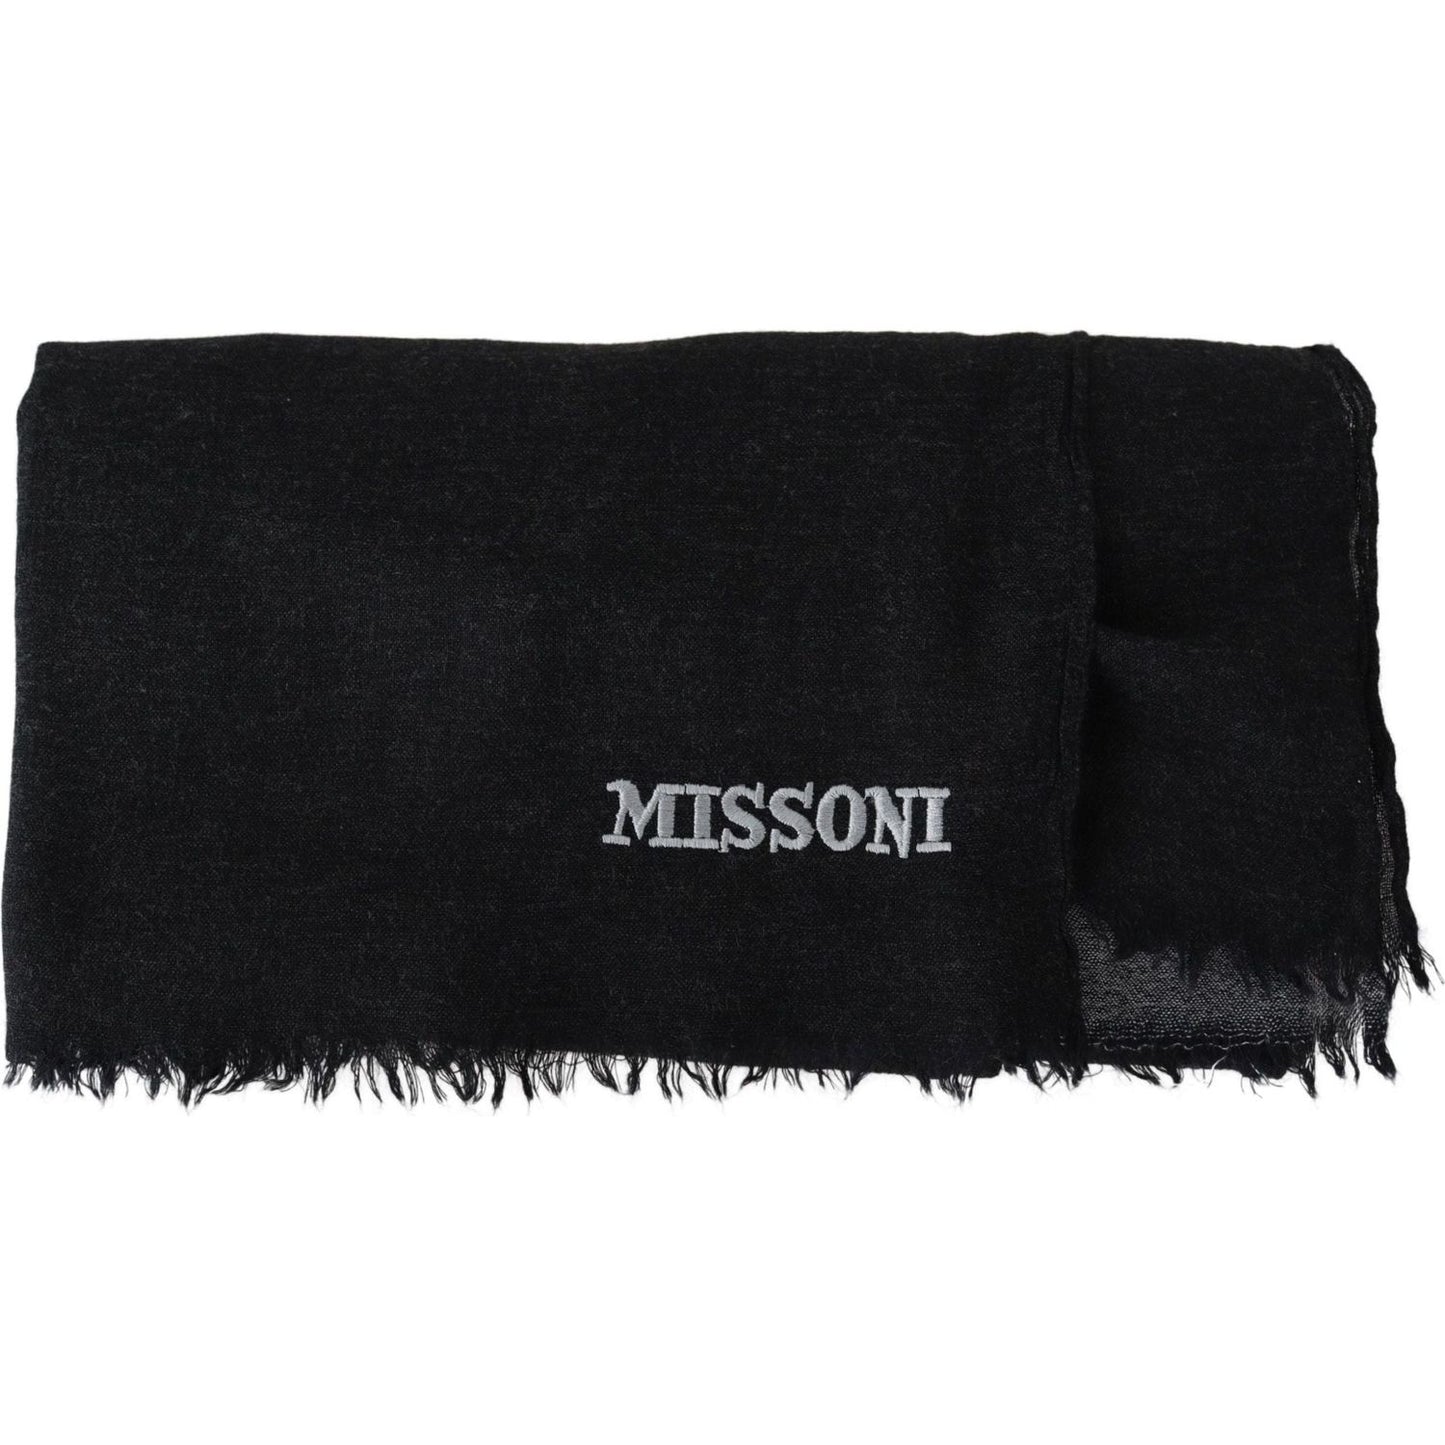 Missoni Elegant Wool Scarf with Signature Embroidery black-100-wool-unisex-neck-wrap-scarf